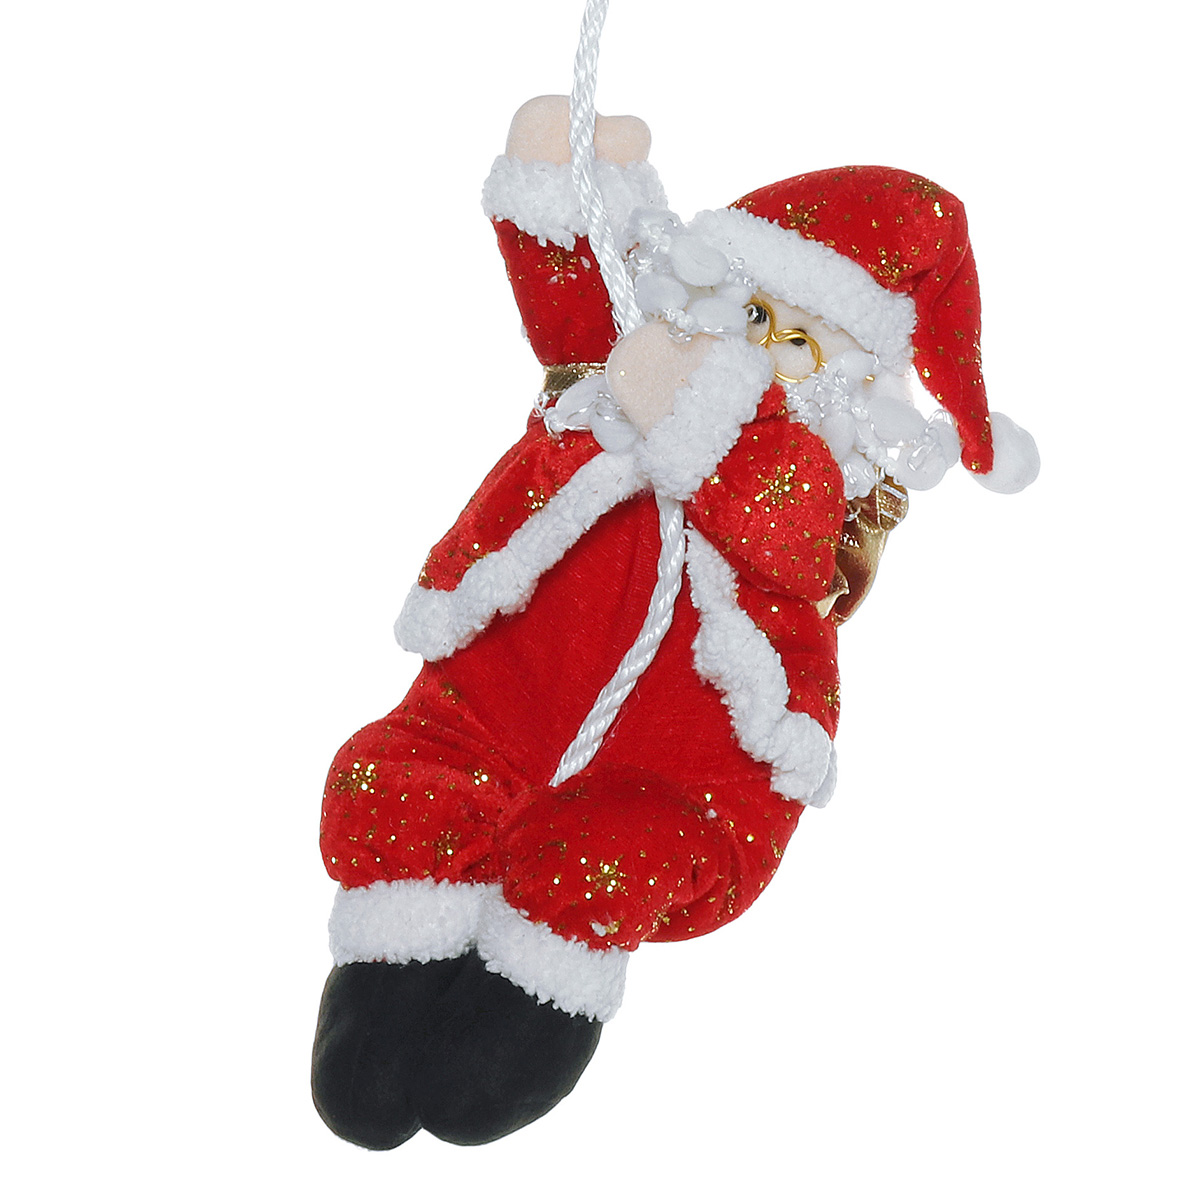 Santa-Climbing-On-Rope-Indoor-Outdoor-Christmas-Tree-Garden-Decorations-1590884-4